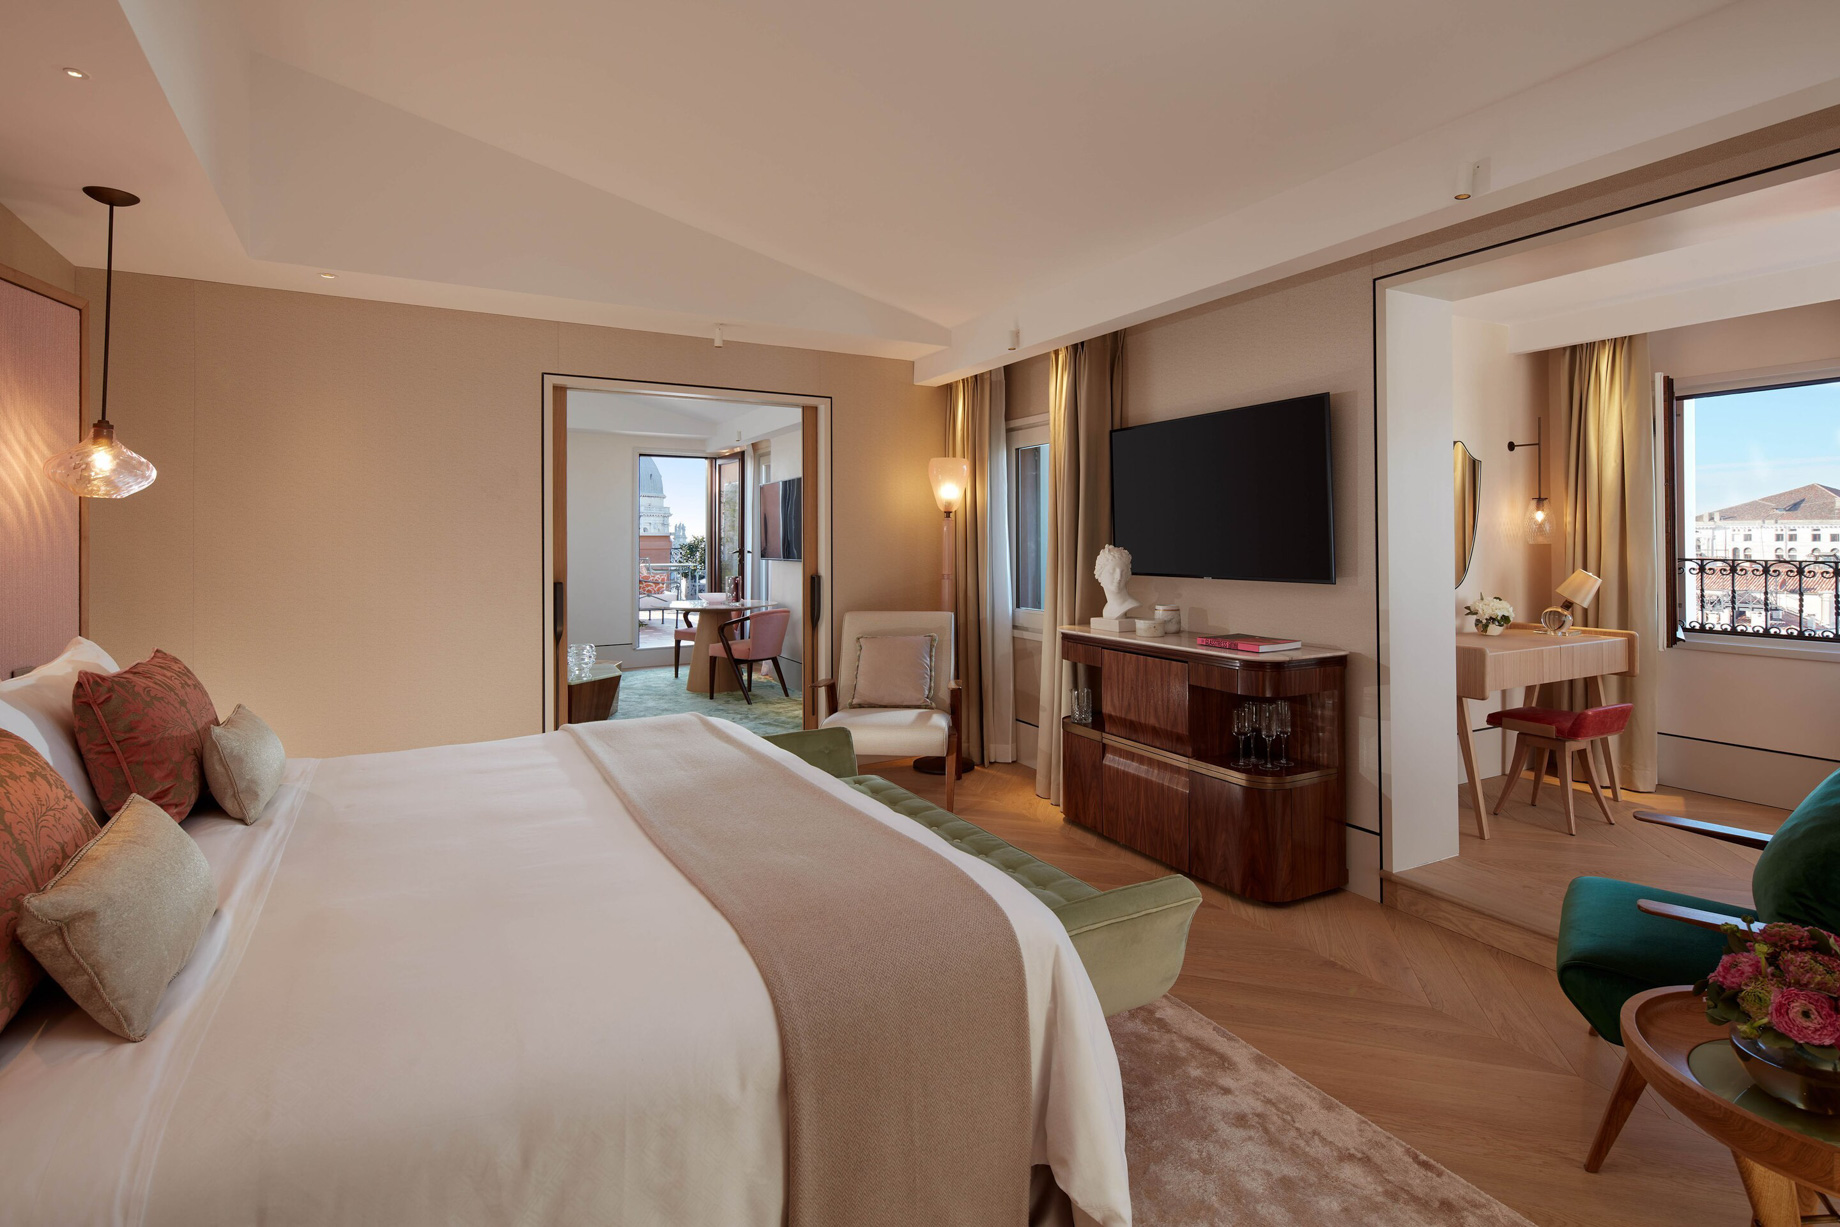 The St. Regis Venice Hotel - Venice, Italy - Penthouse Suite Master Bedroom